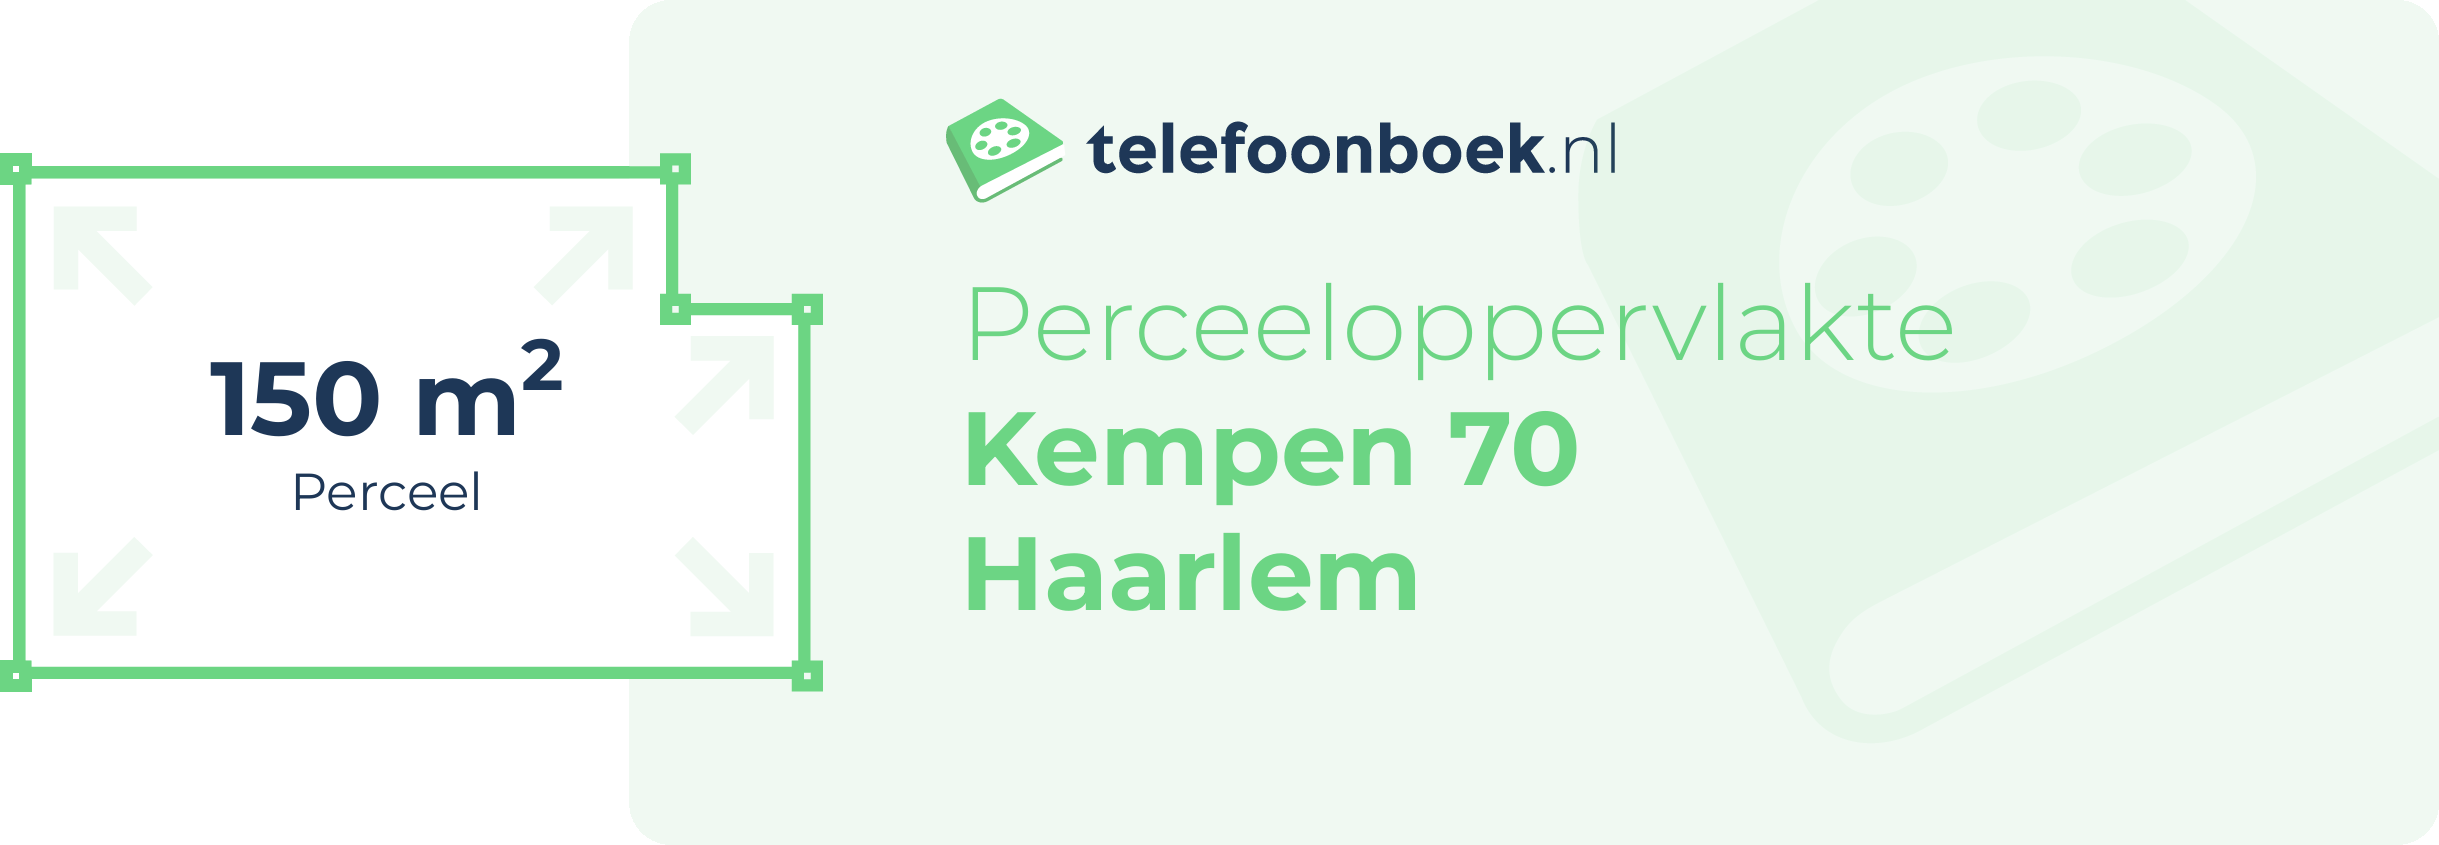 Perceeloppervlakte Kempen 70 Haarlem